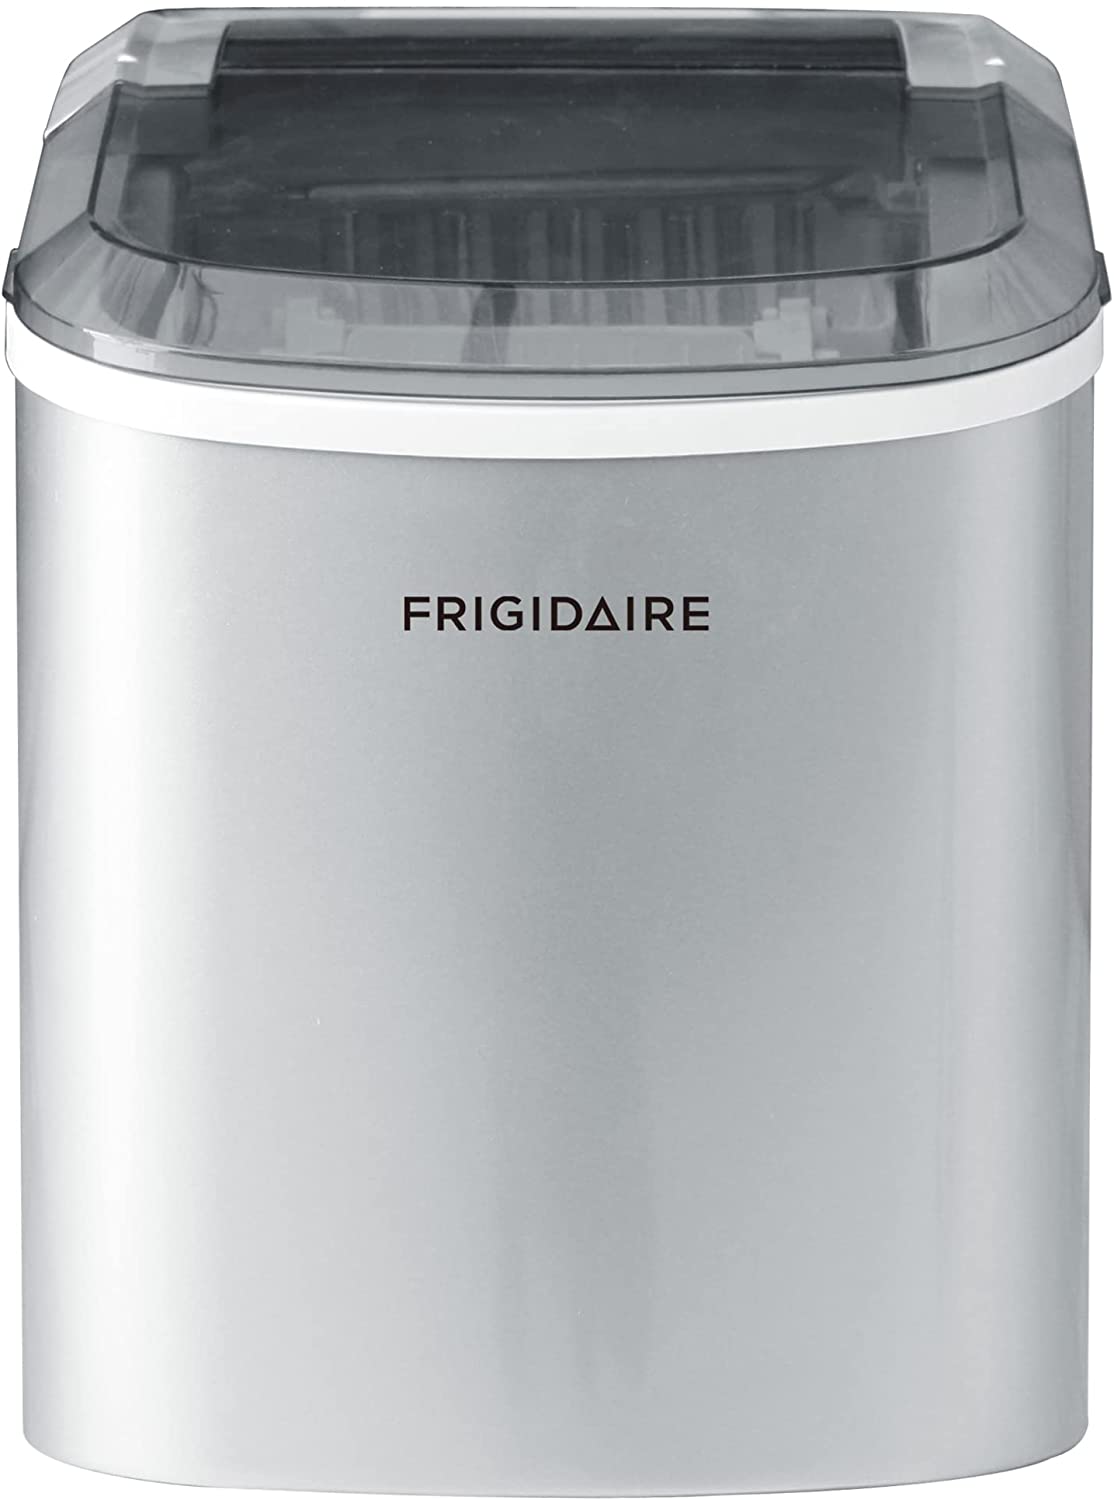 Frigidaire EFIC189-Silver Compact Ice Maker, 26 lb per Day - Silver